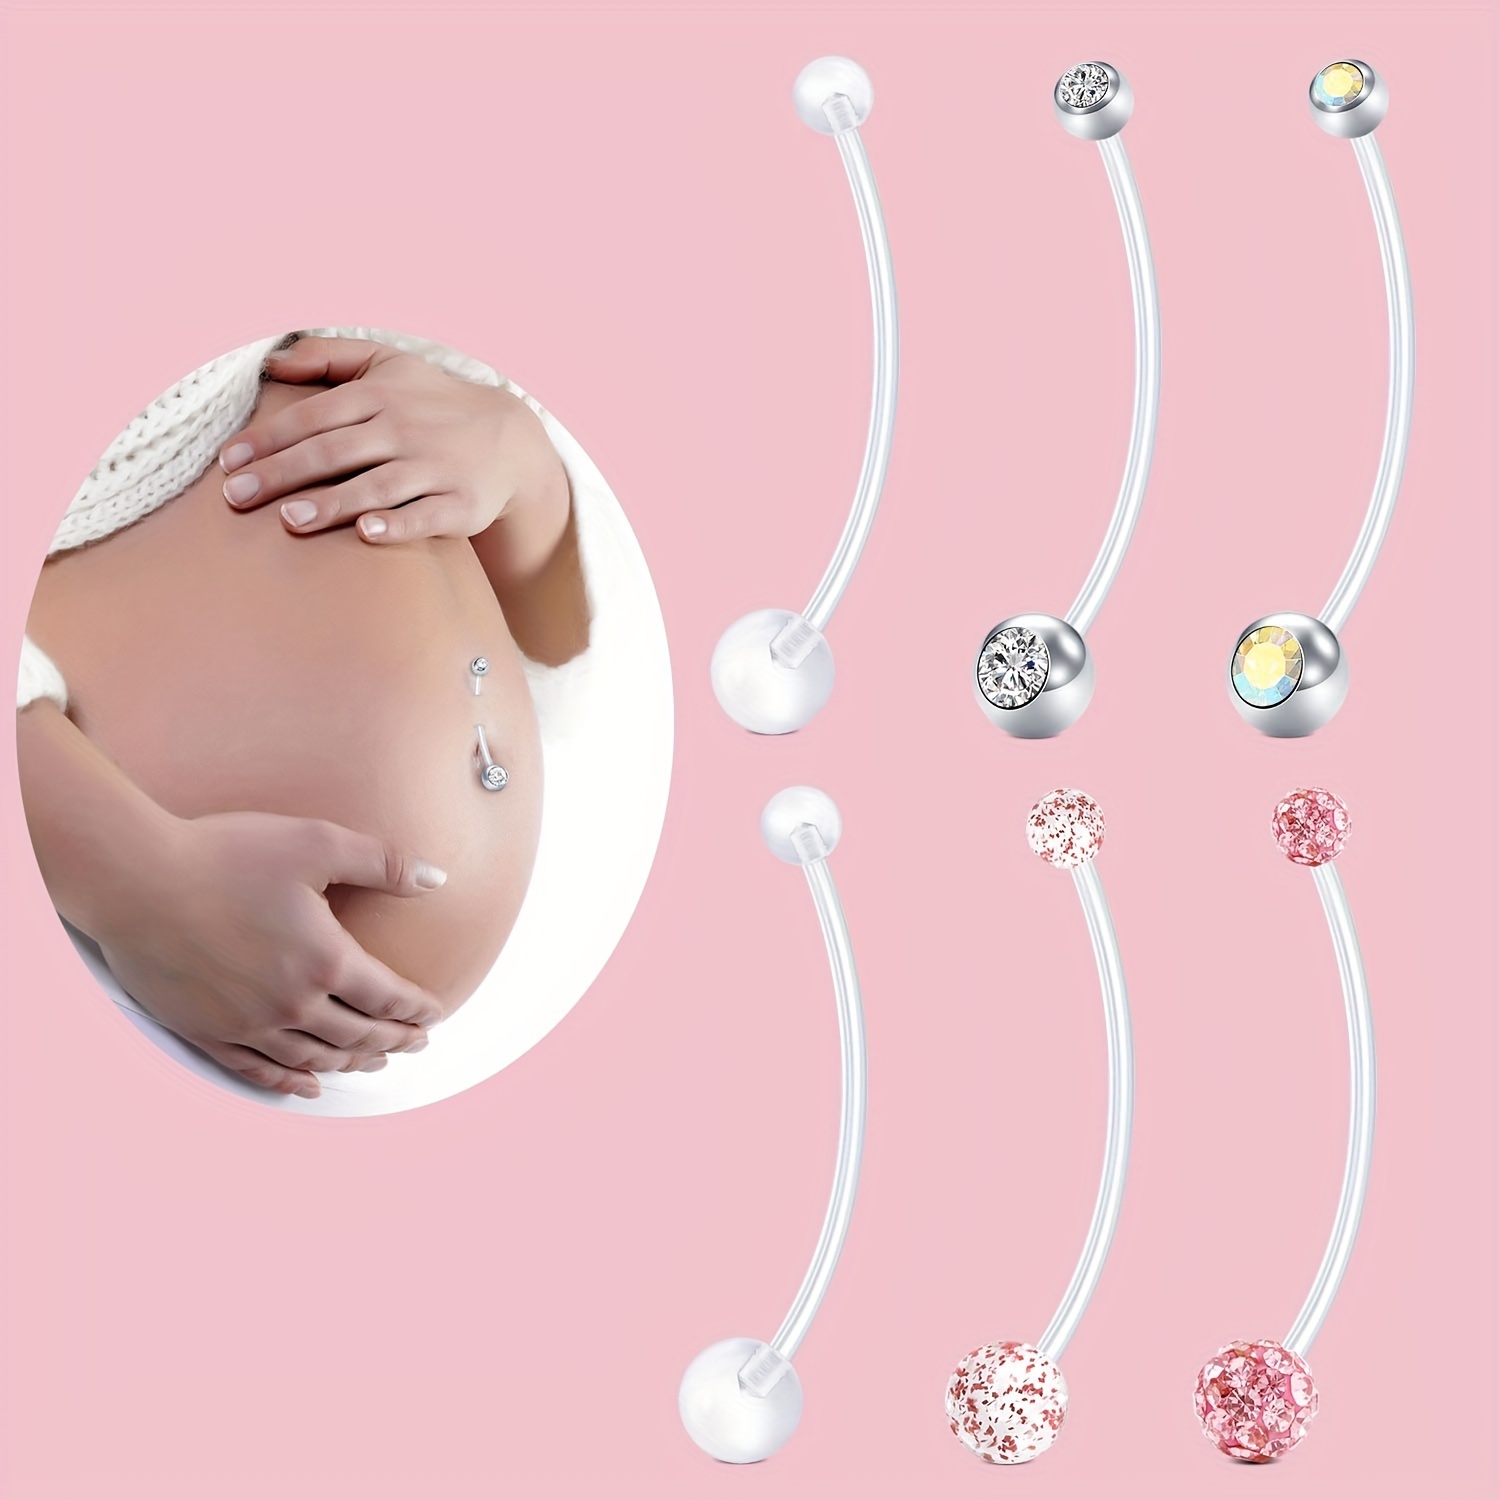 14G 1.5 FLEXIBLE MATERNITY PREGNANCY BELLY NAVEL RING INDUSTRIAL